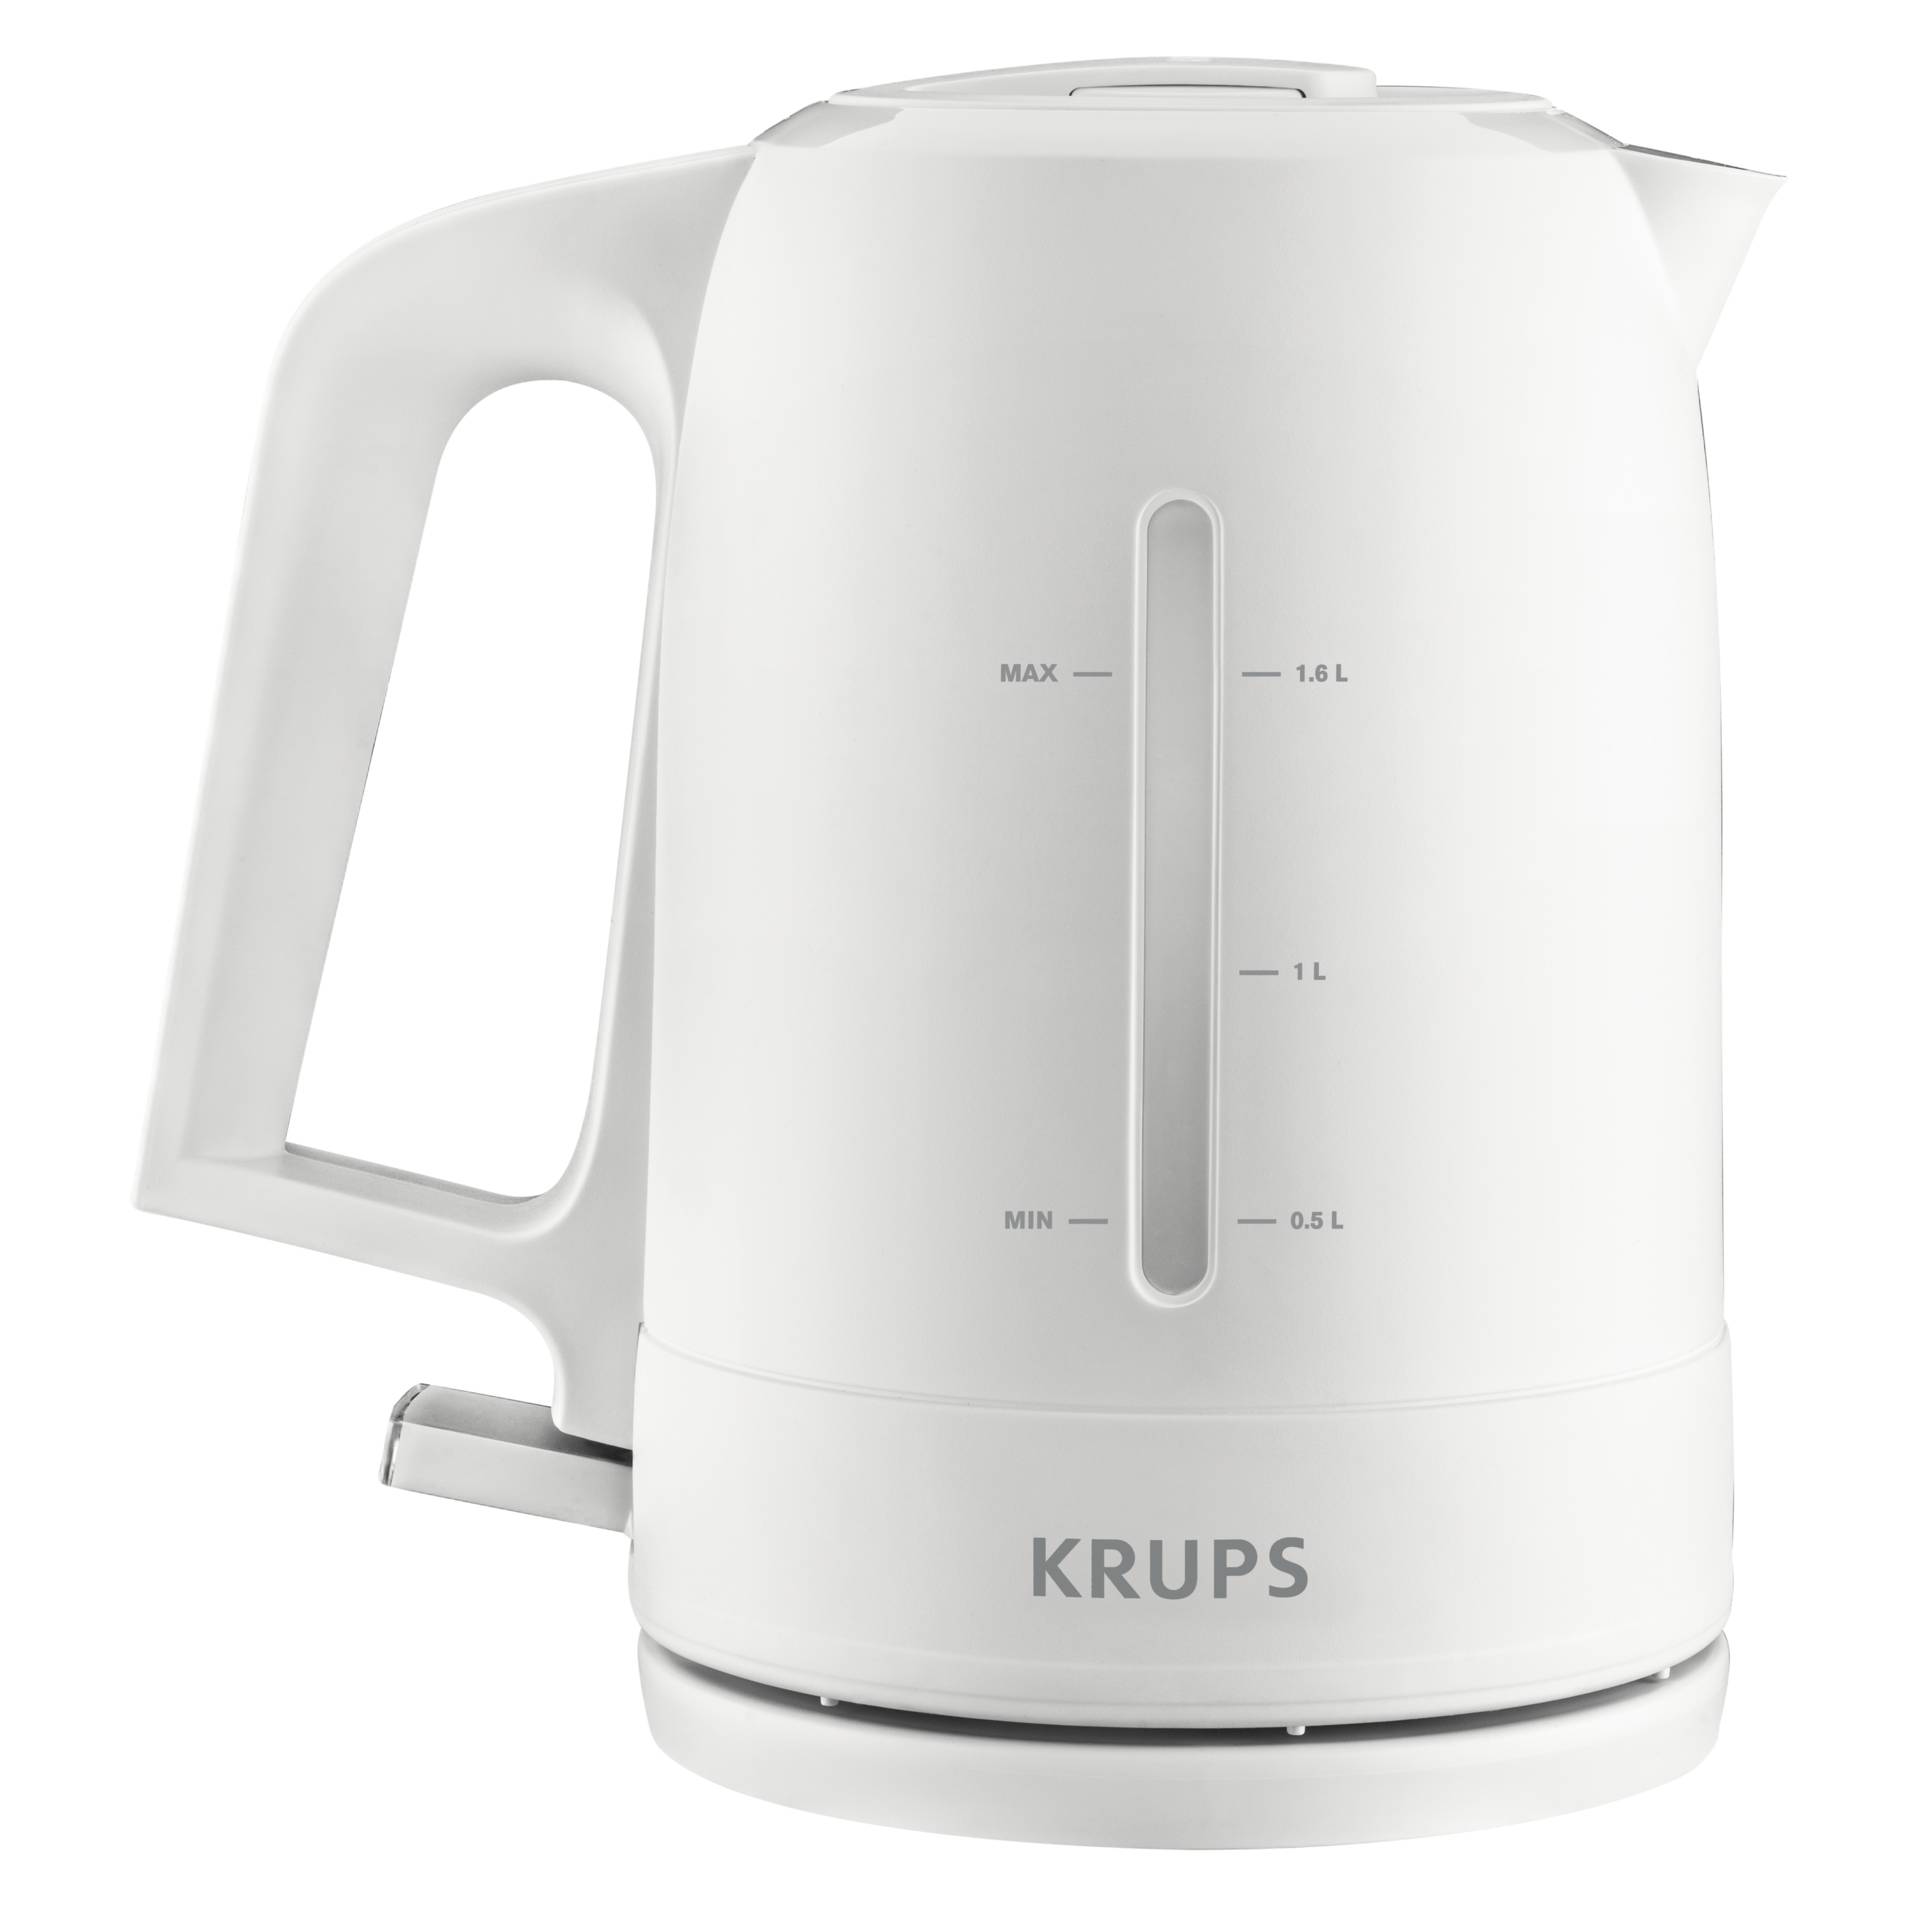 Krups -6 Liter 1 Weiß Pro -Krups Hardware/Electronic BW2441 Aroma Wasserkocher (BW2441)